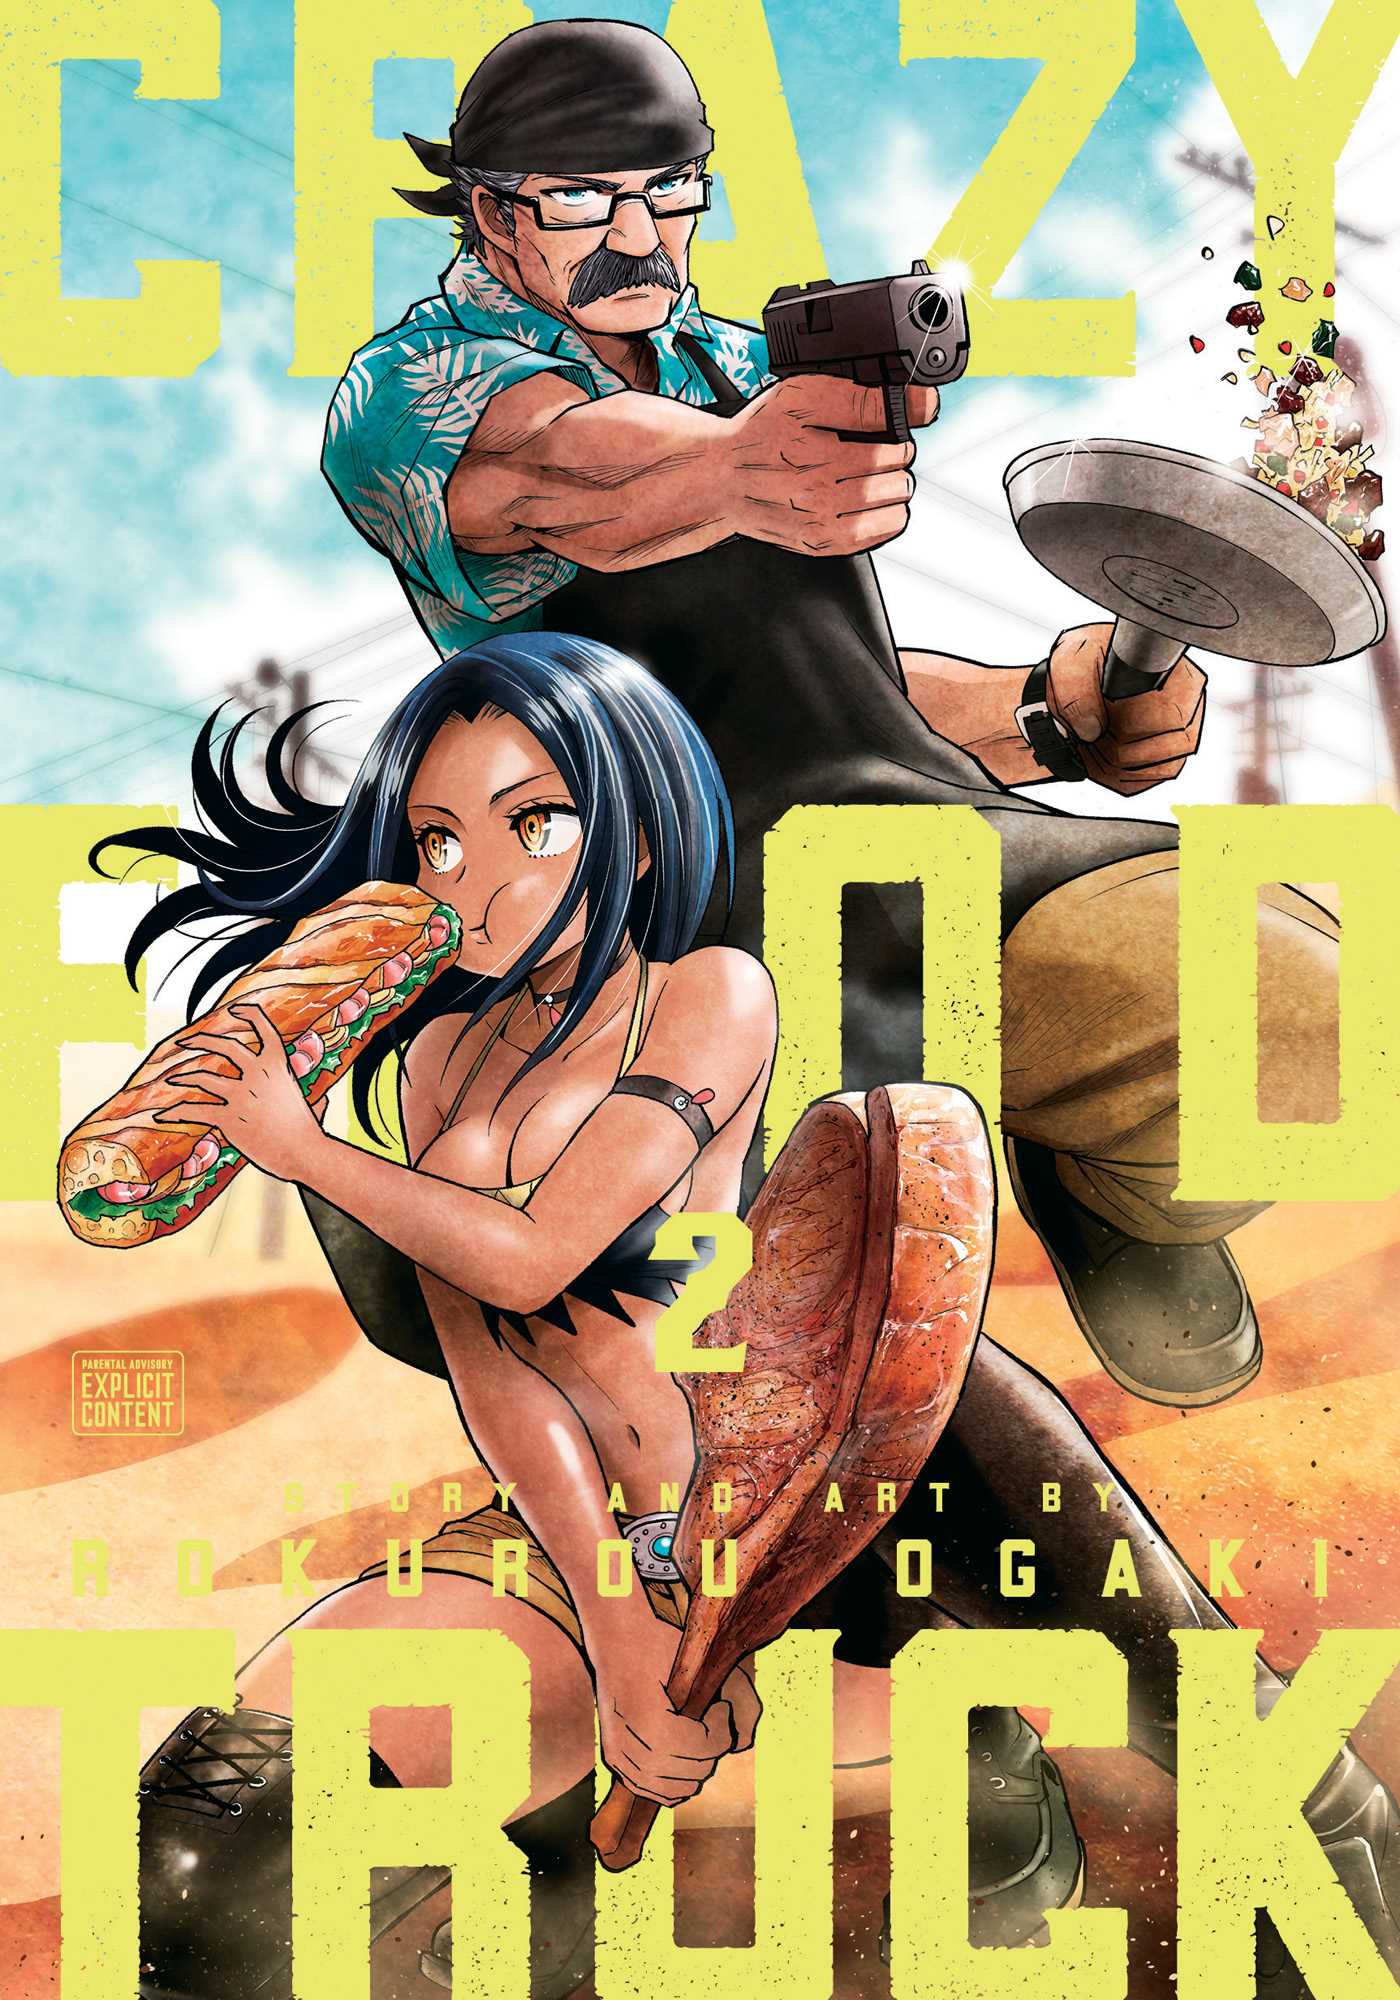 Crazy Food Truck Manga Volume 2